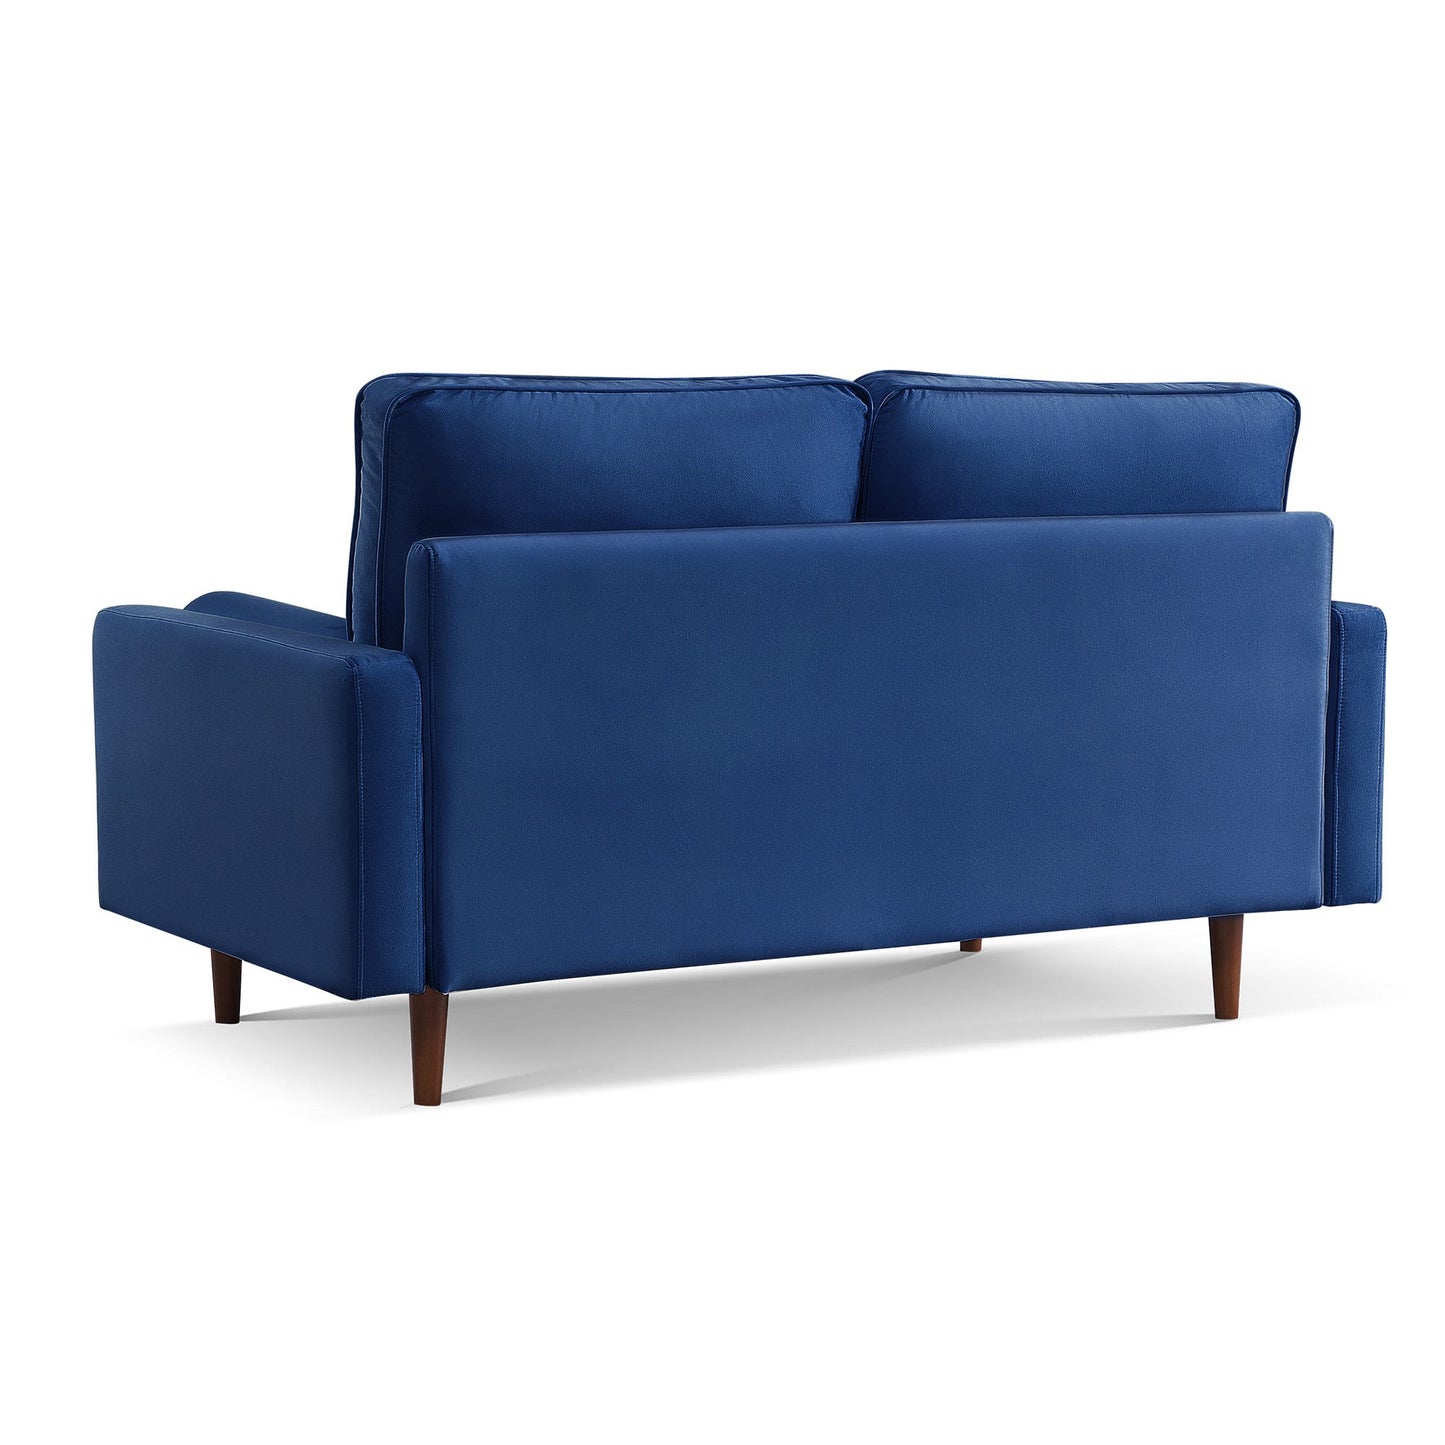 69" Blue Velvet Sofa And Toss Pillows With Dark Brown Legs